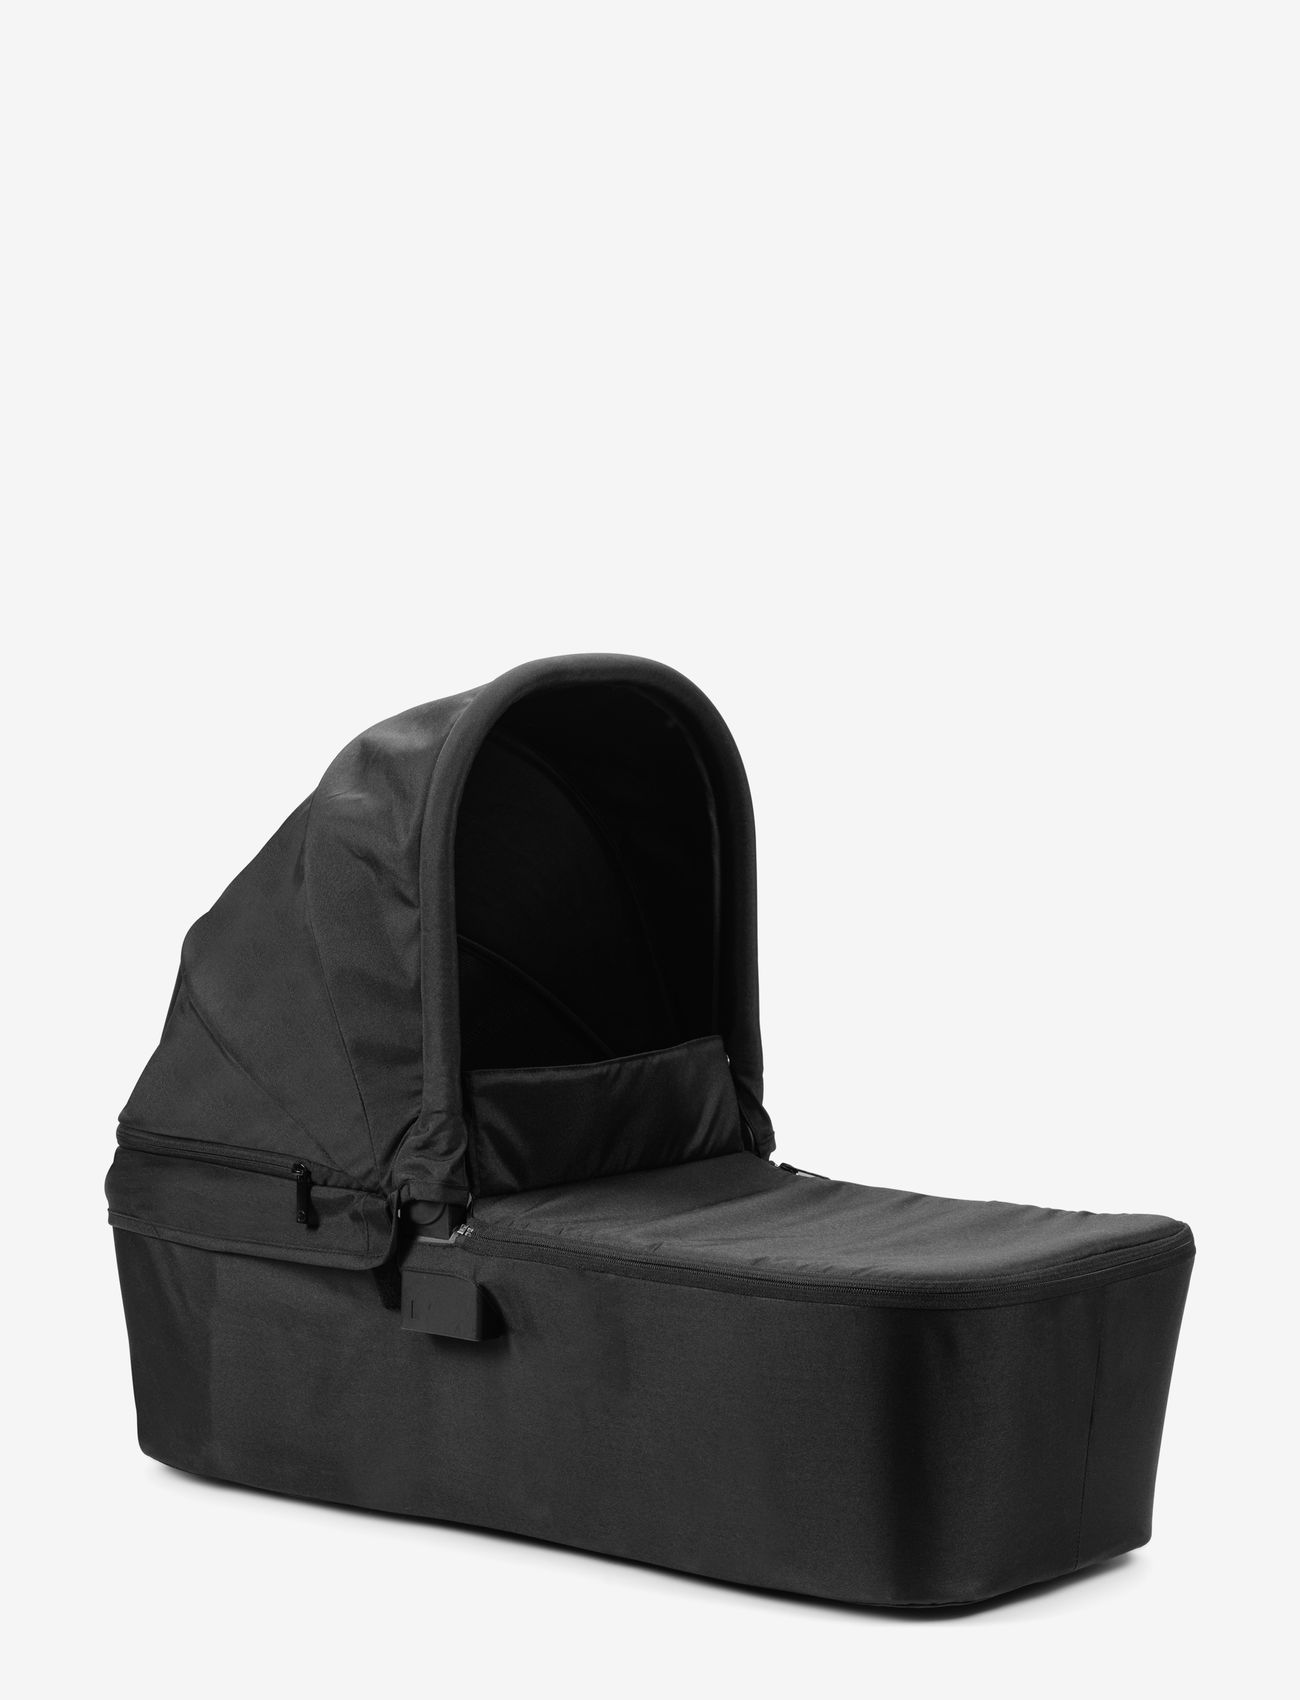 Elodie Details - MONDO Carry Cot - Black - stroller accessories - black - 1